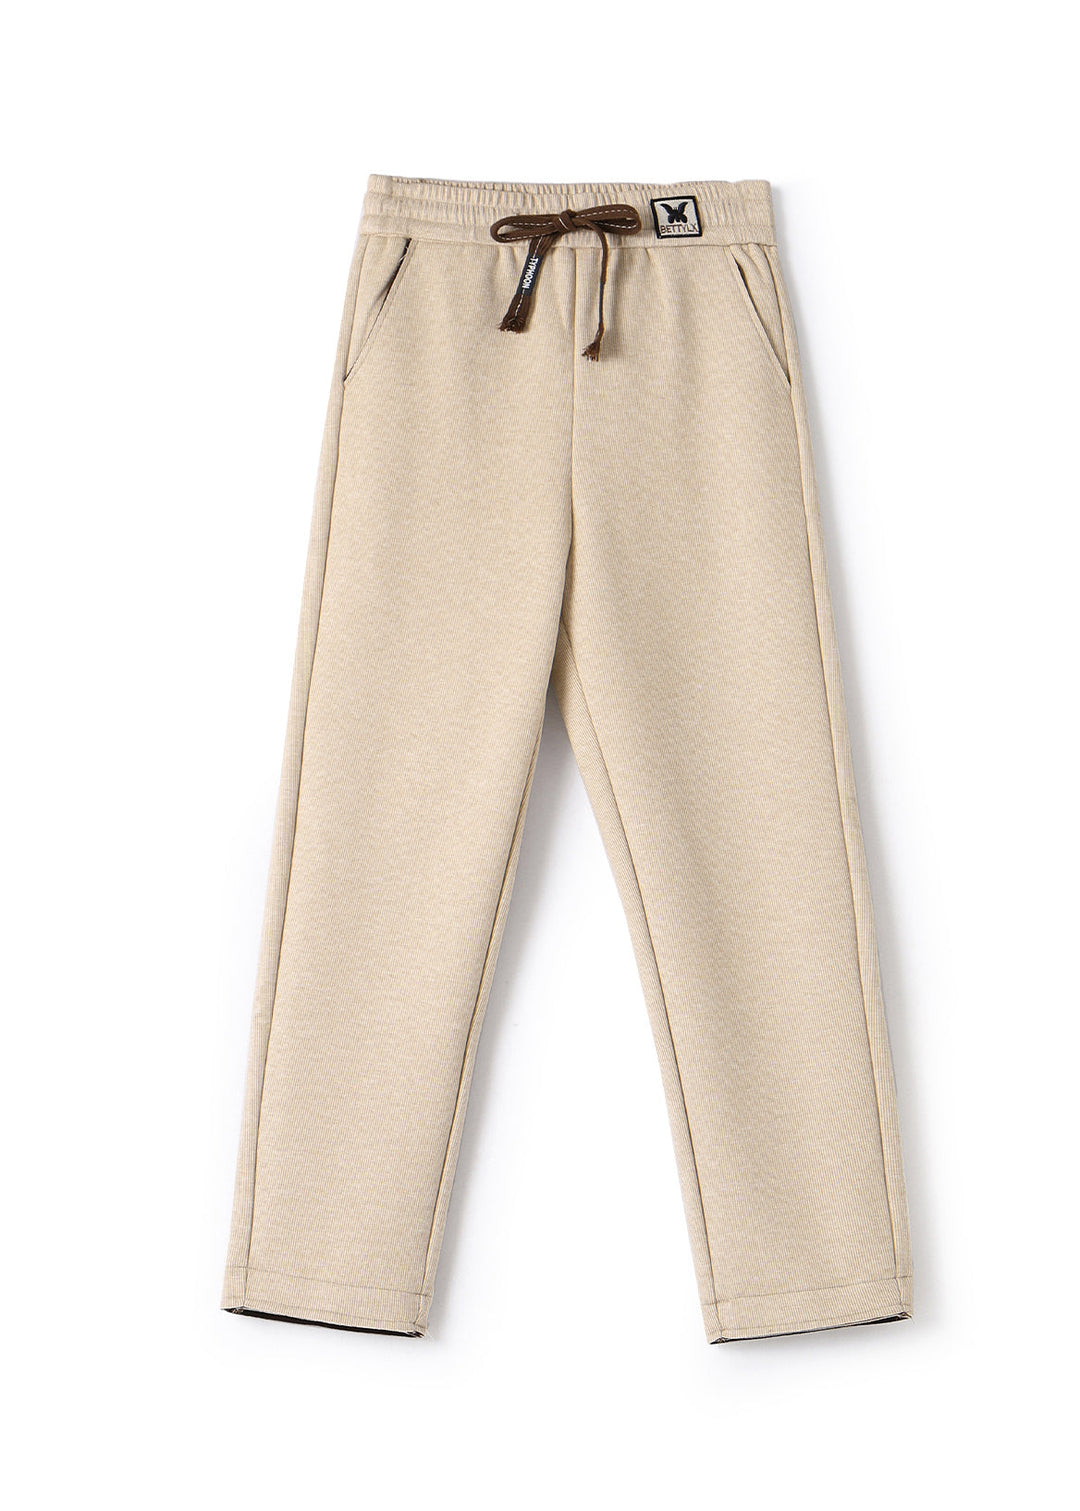 French Beige Elastic Waist Pockets Cotton Crop Pants Spring